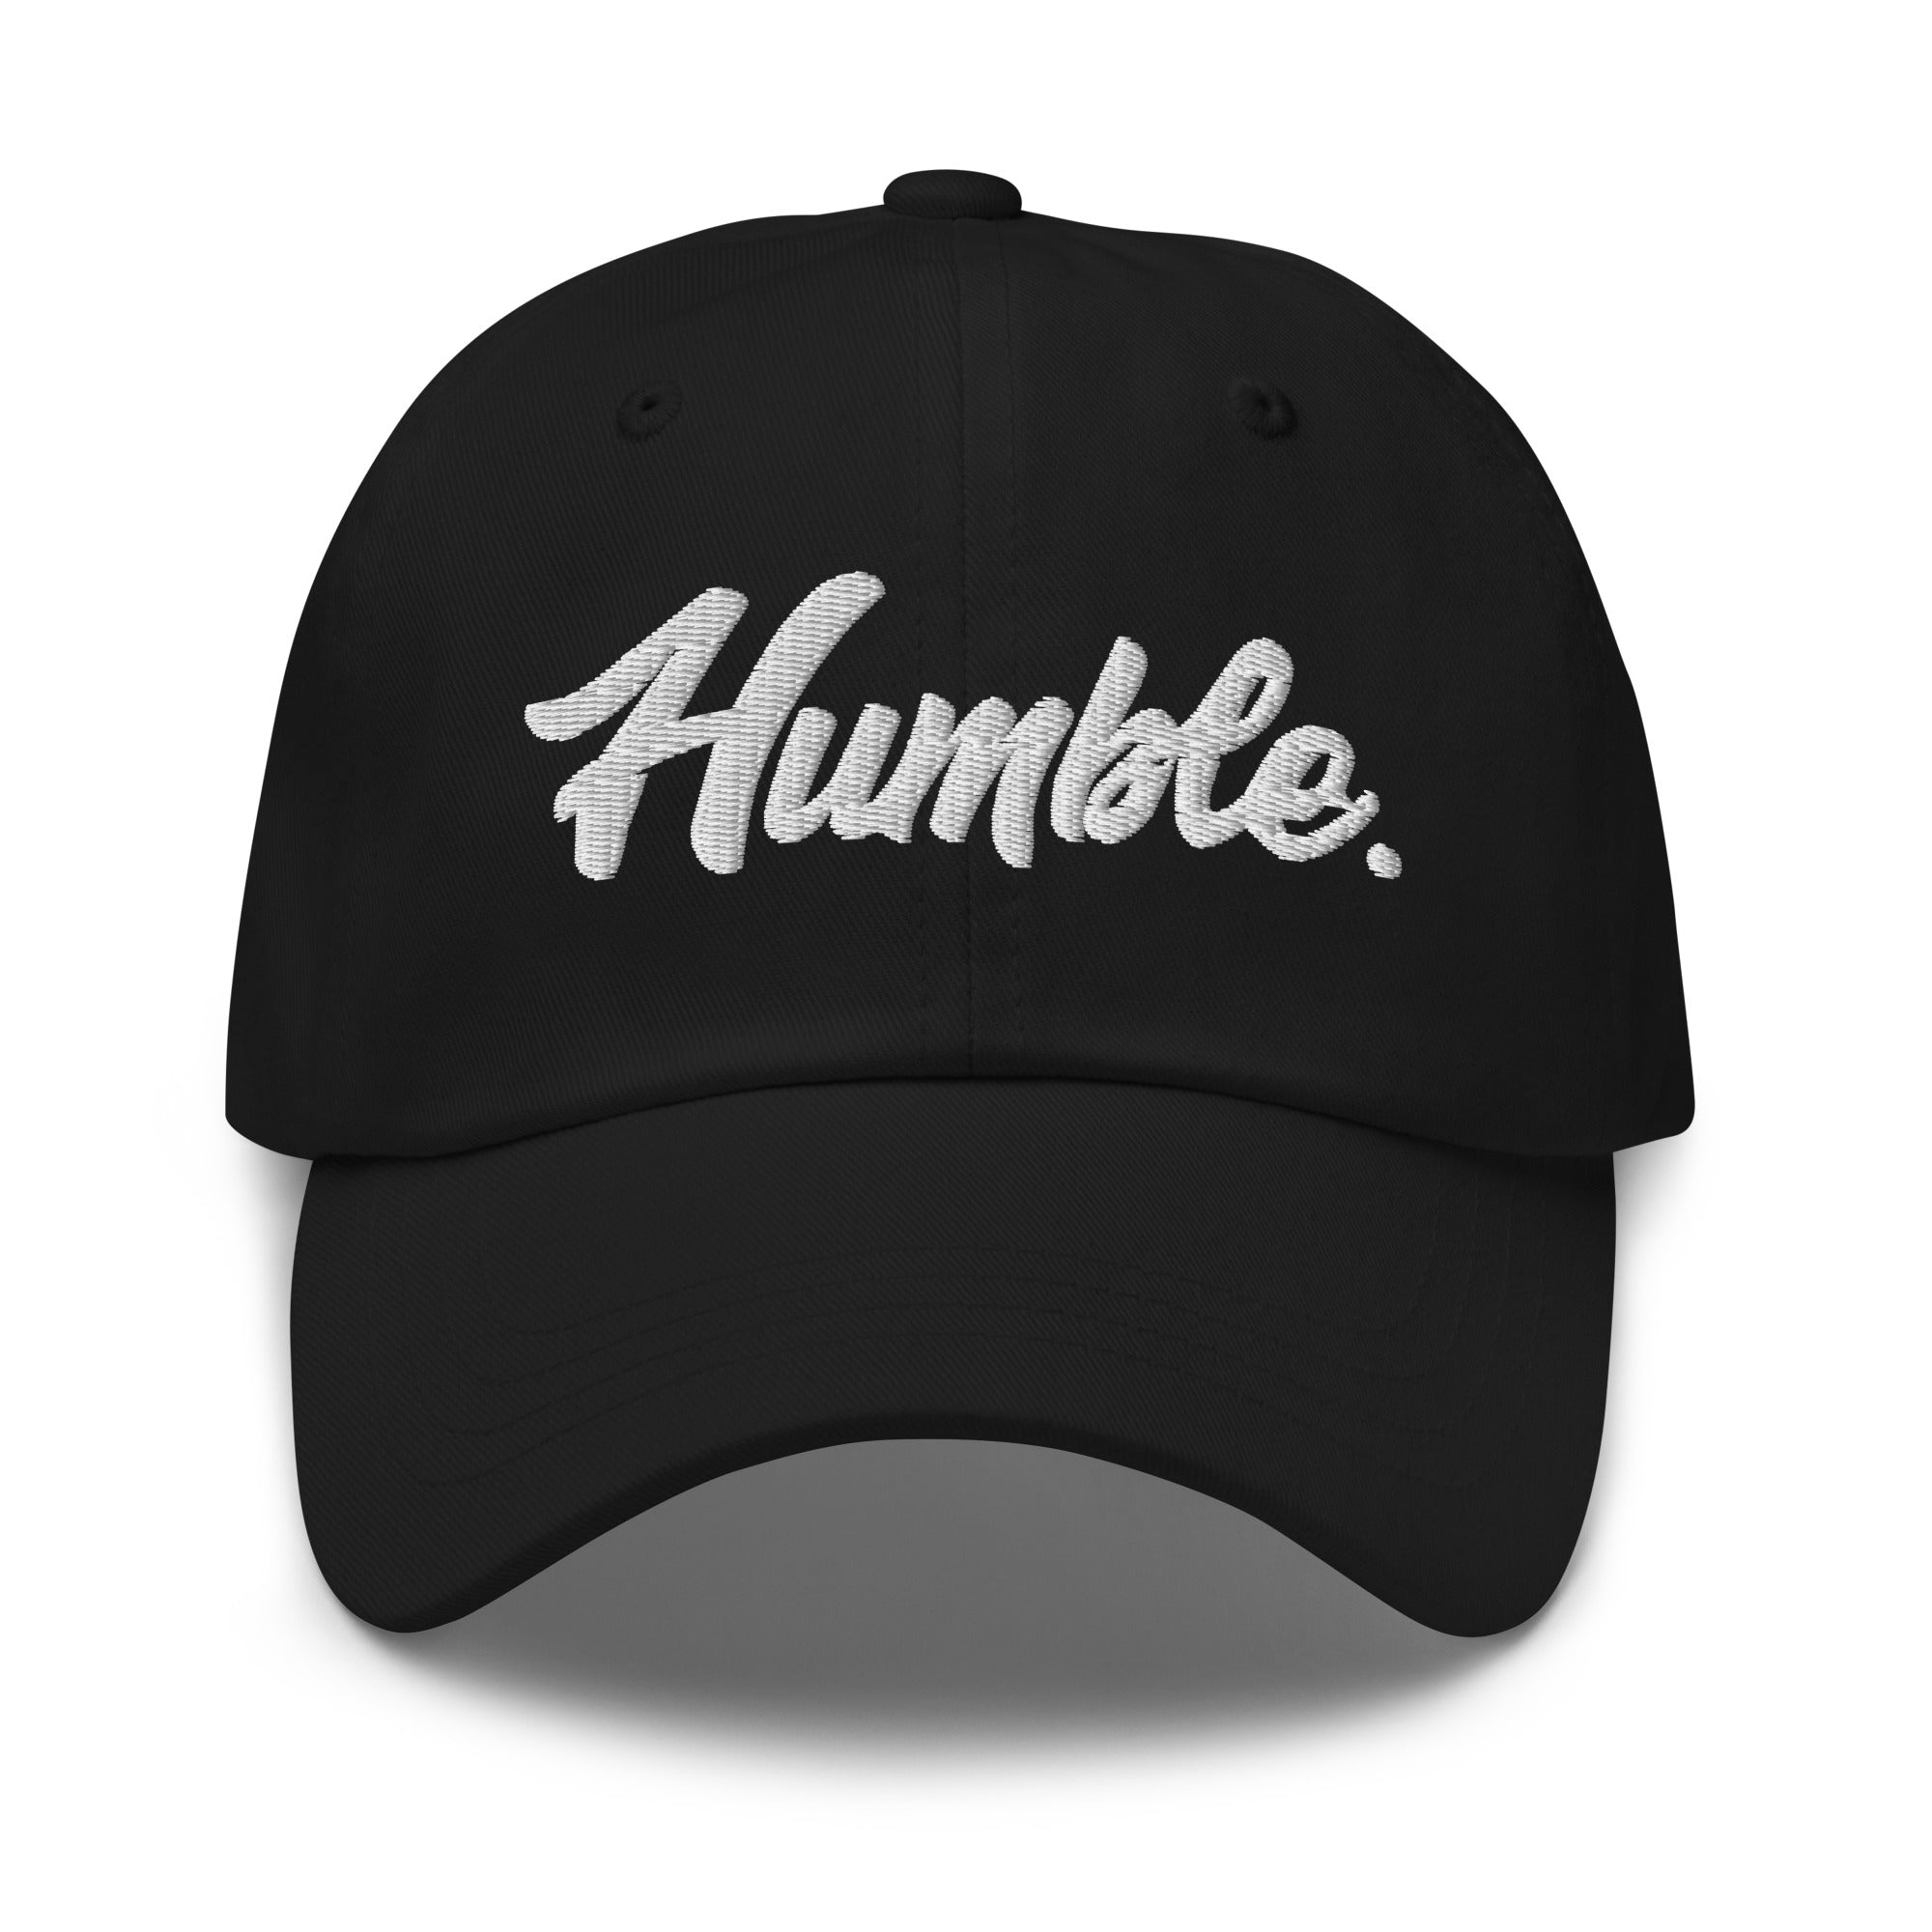 Humble. Dad hat